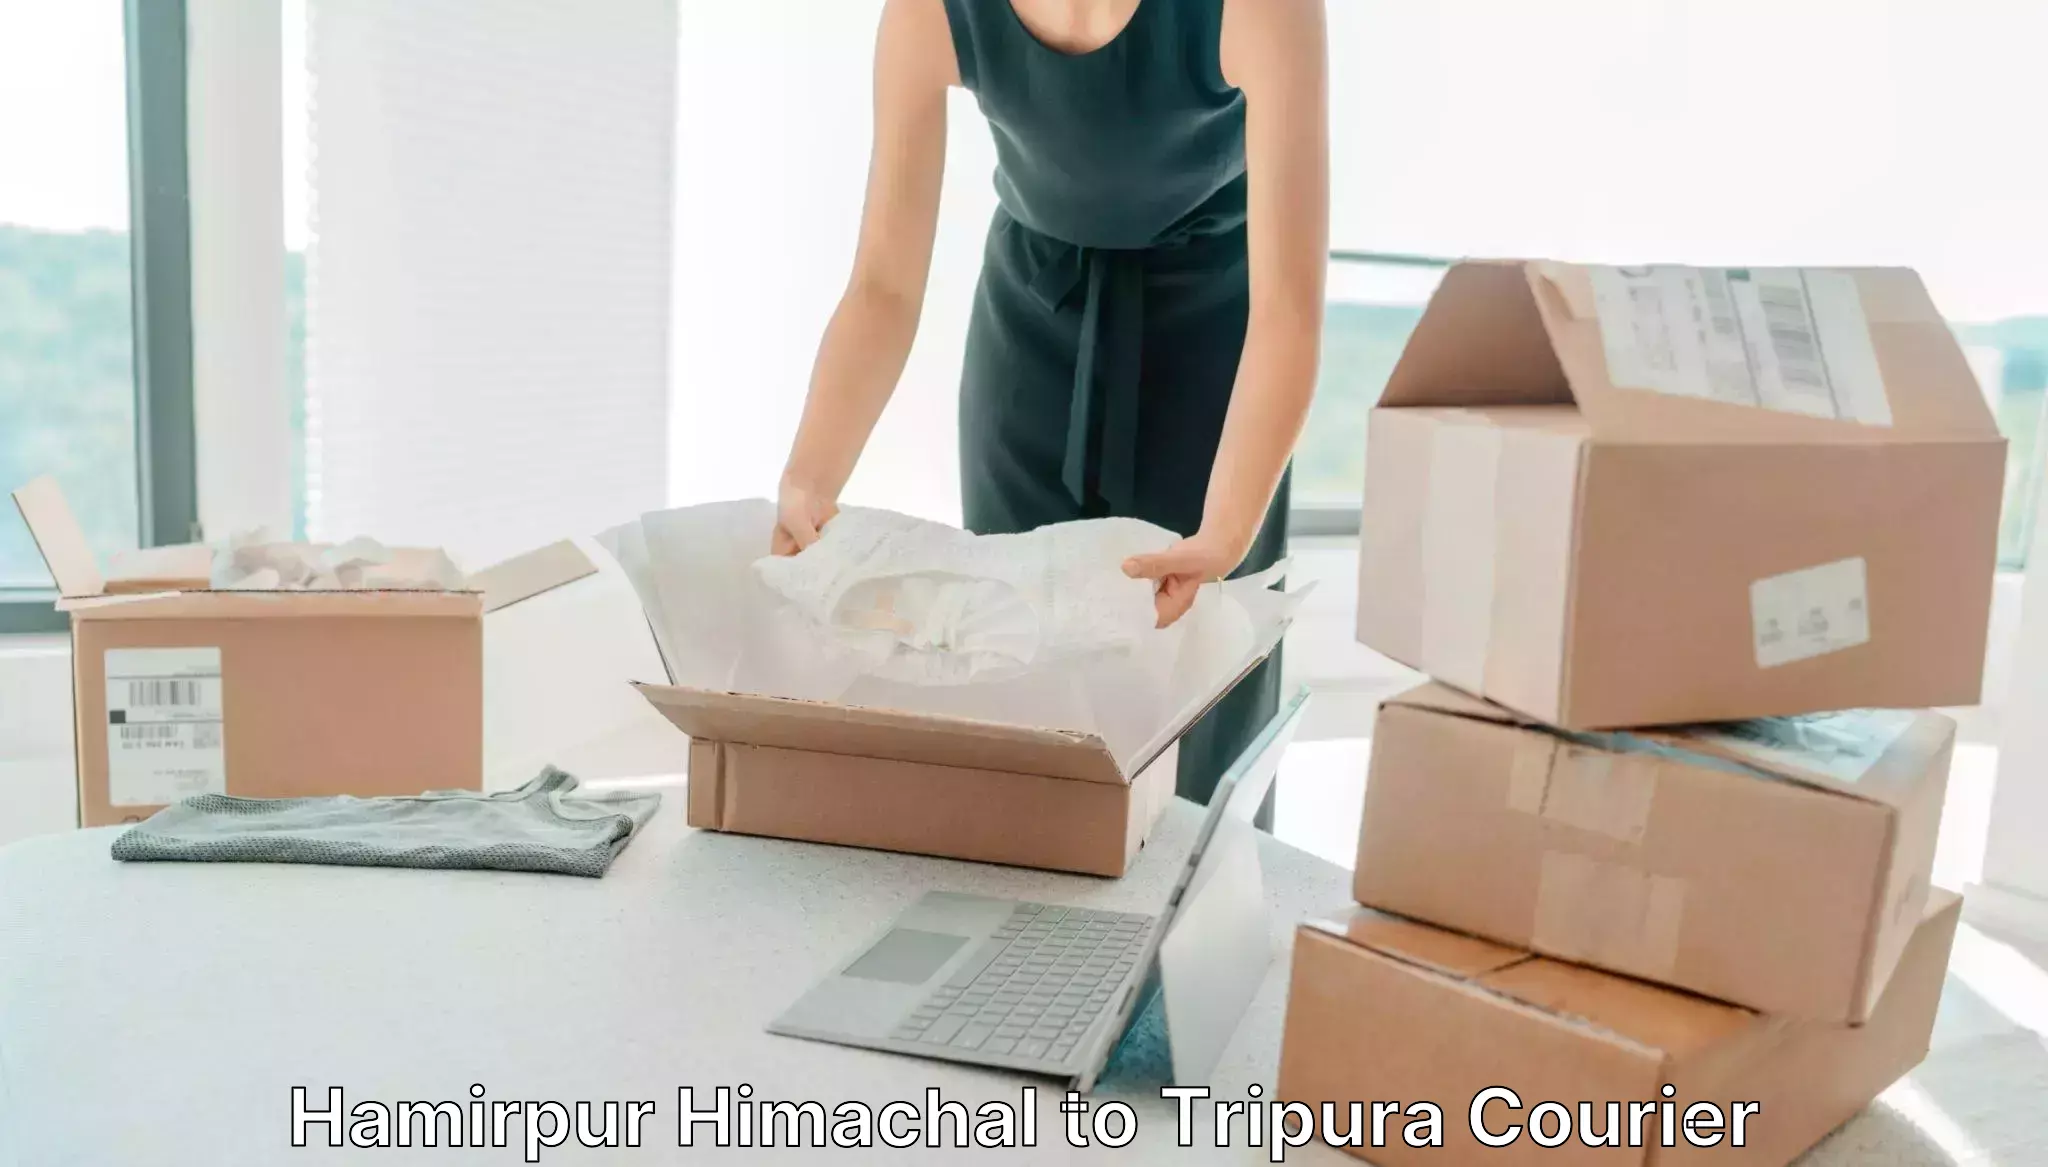 Lightweight parcel options Hamirpur Himachal to Tripura